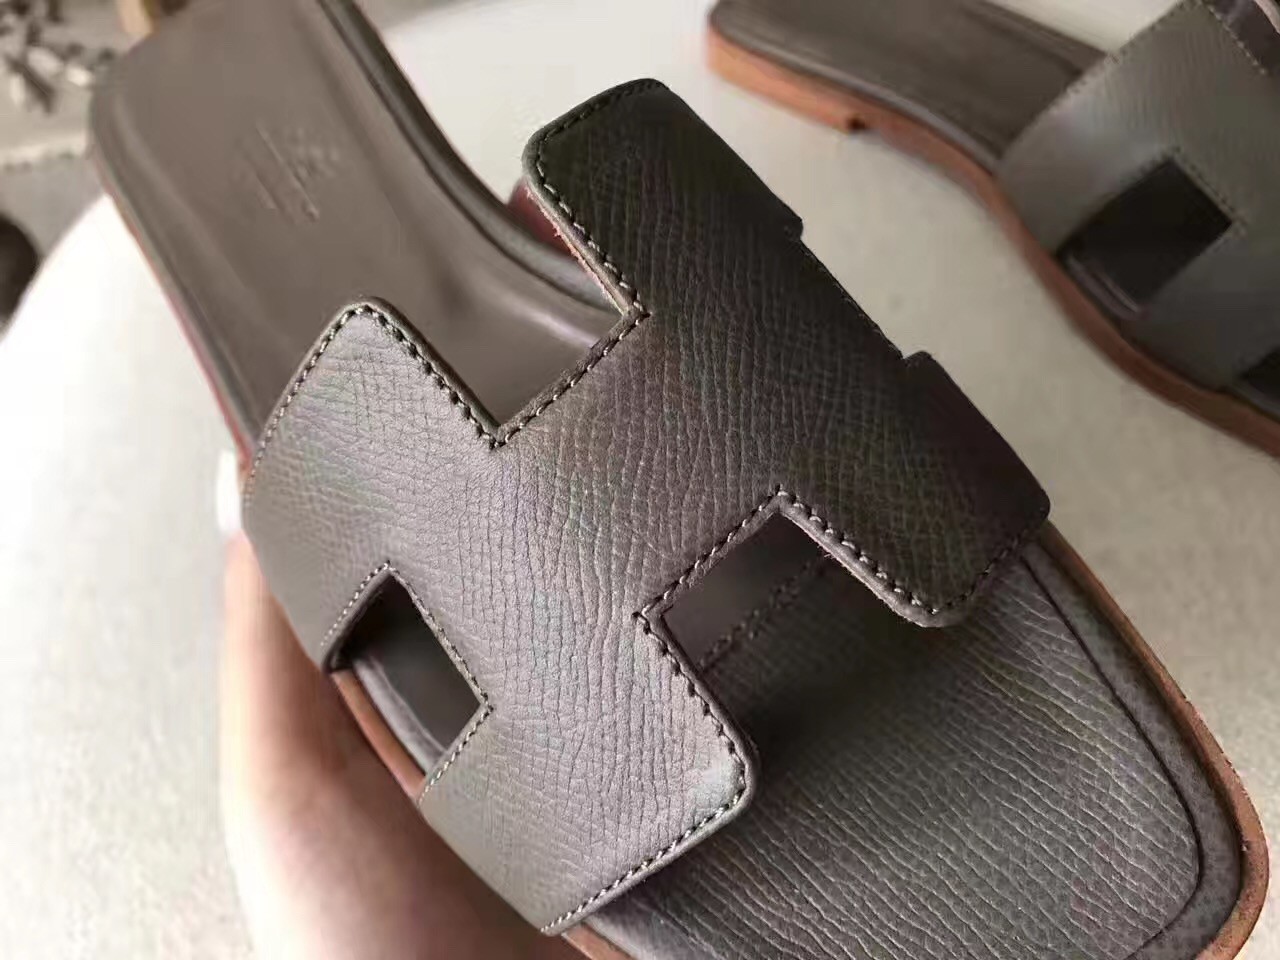 Hermes Oran Sandals Etoupe Epsom Leather Flat Shoes 38.5 – Mightychic